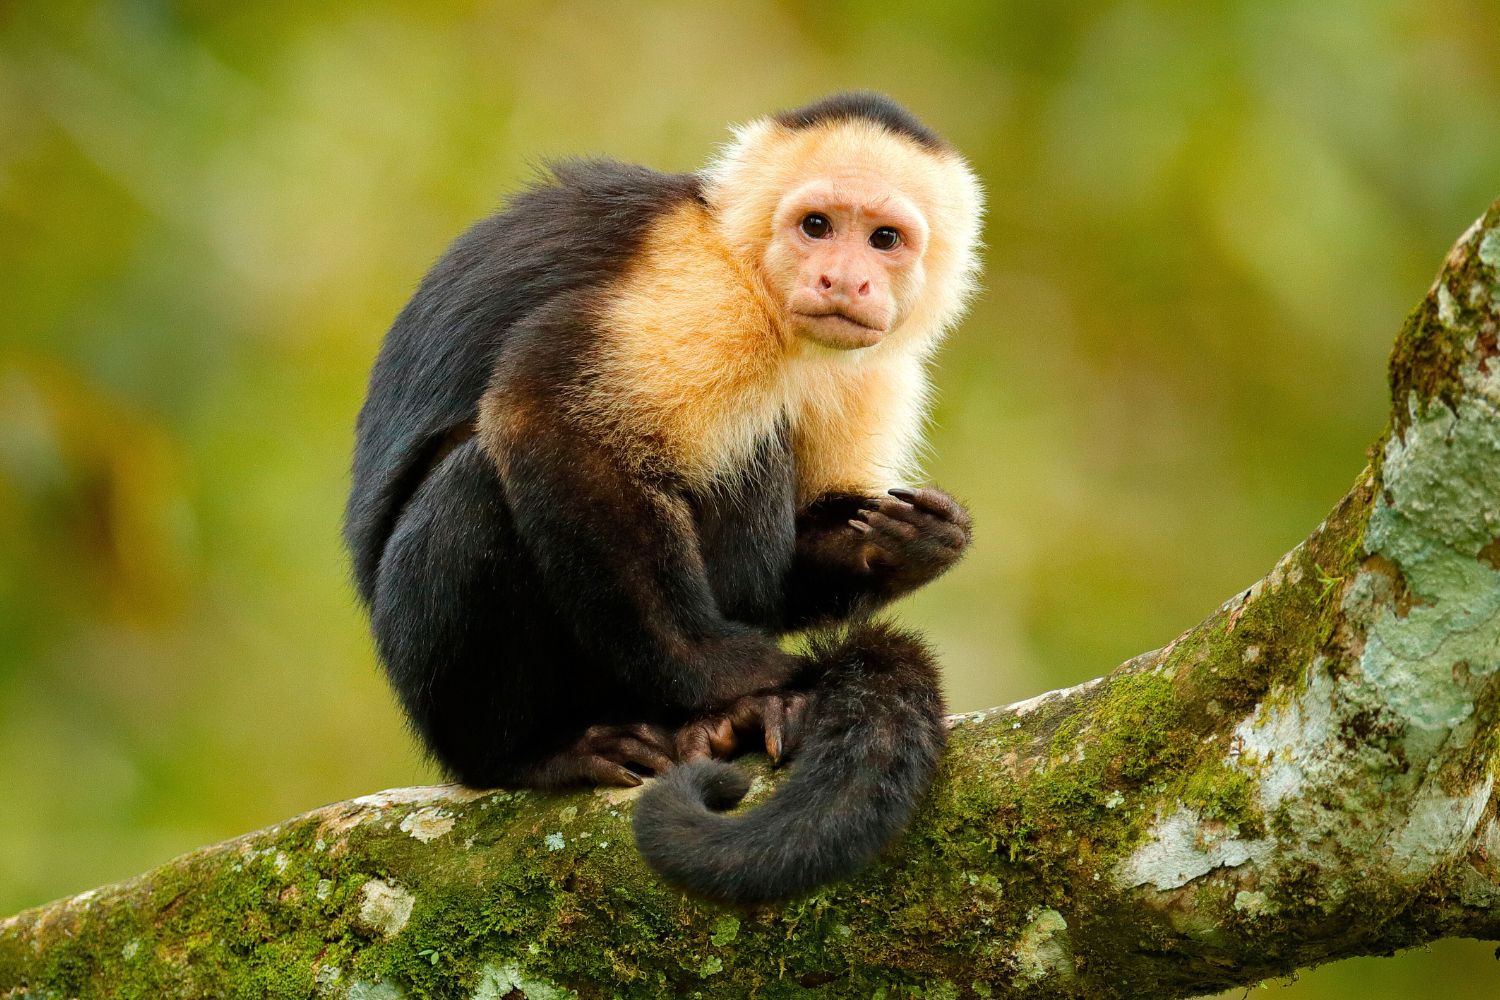 4. Capuchin Monkey